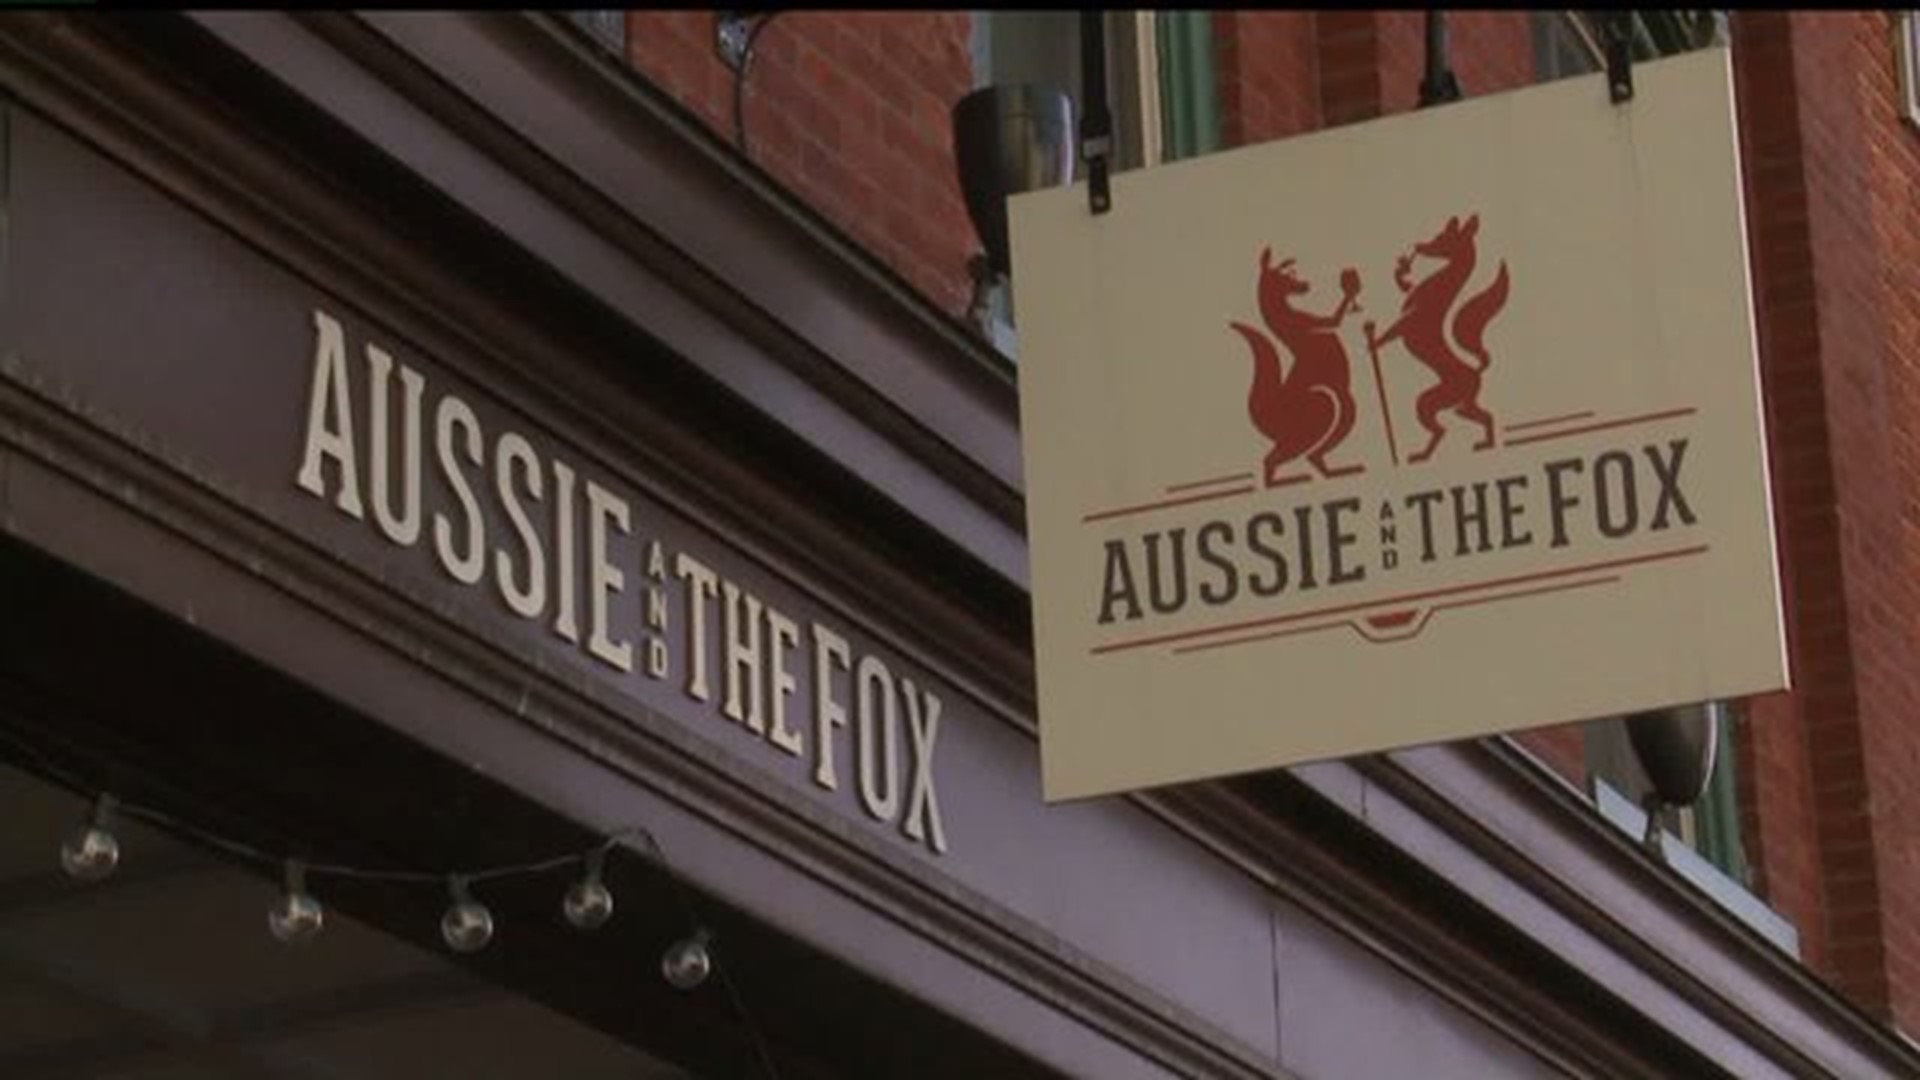 Lancaster Restaurant Spotlight: Aussie and the Fox